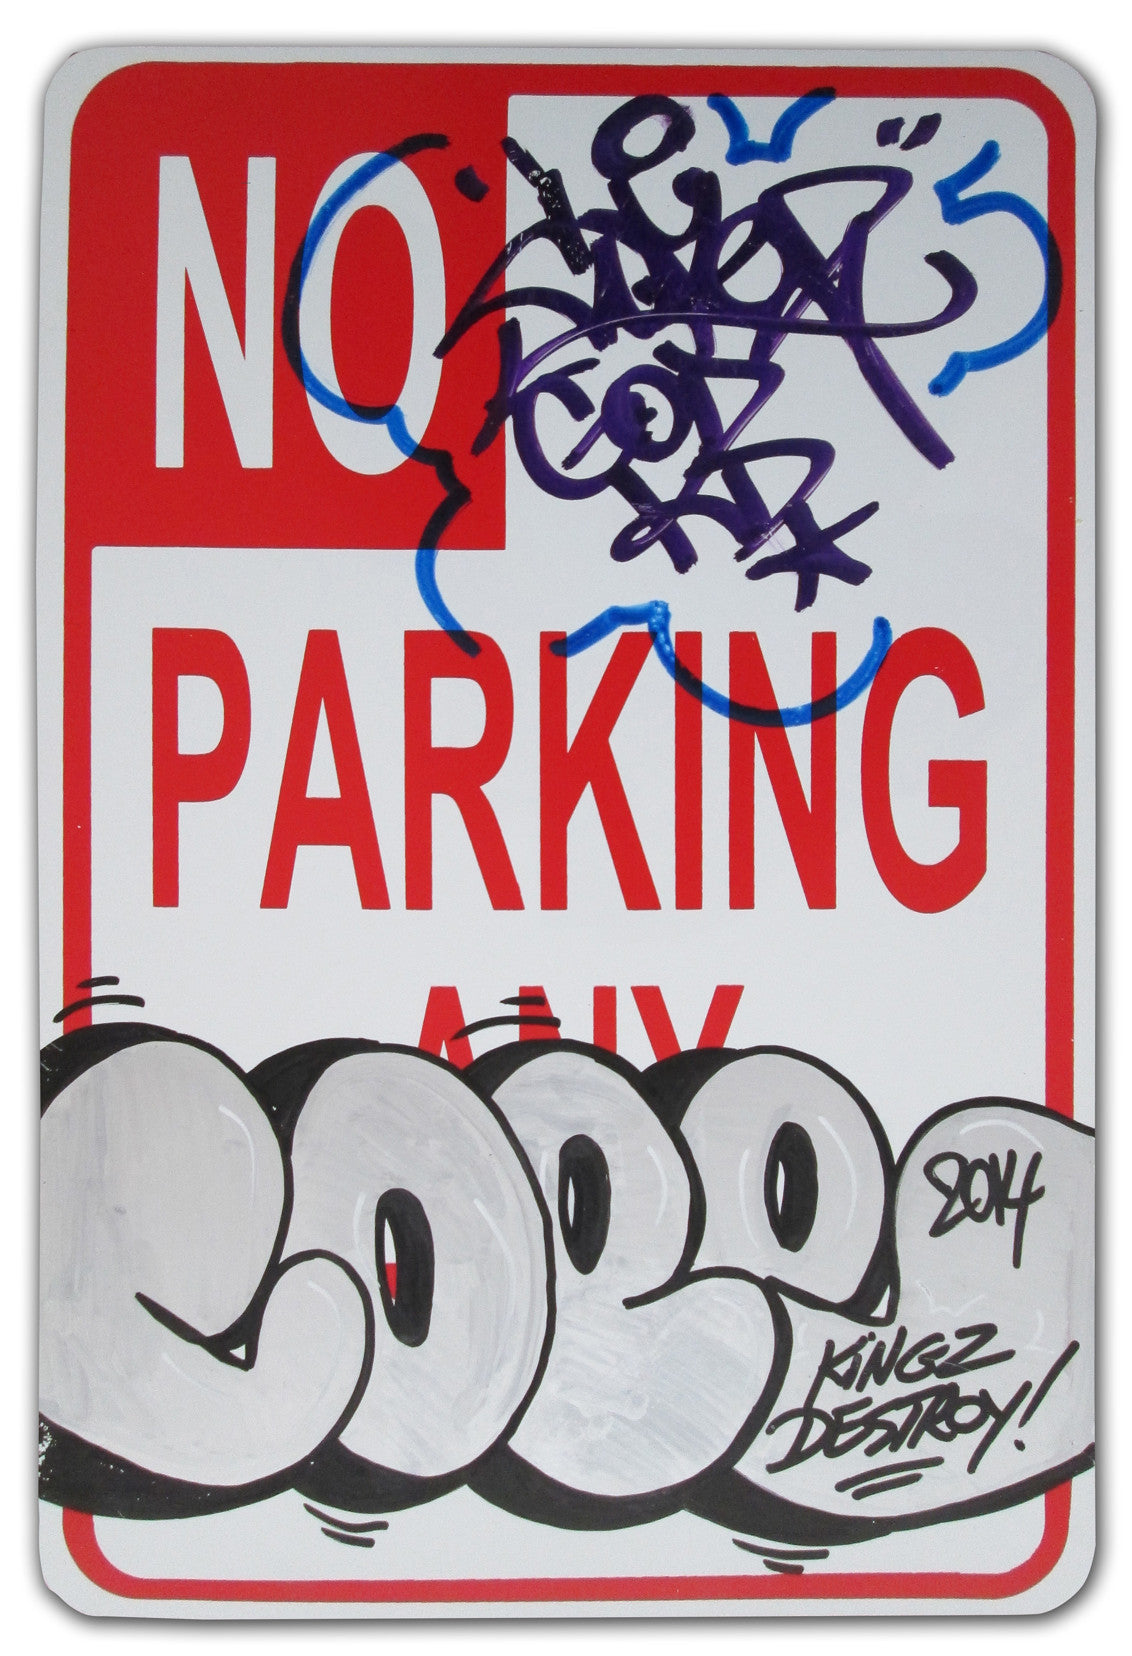 COPE 2 - "Kings destroy" No Parking Sign